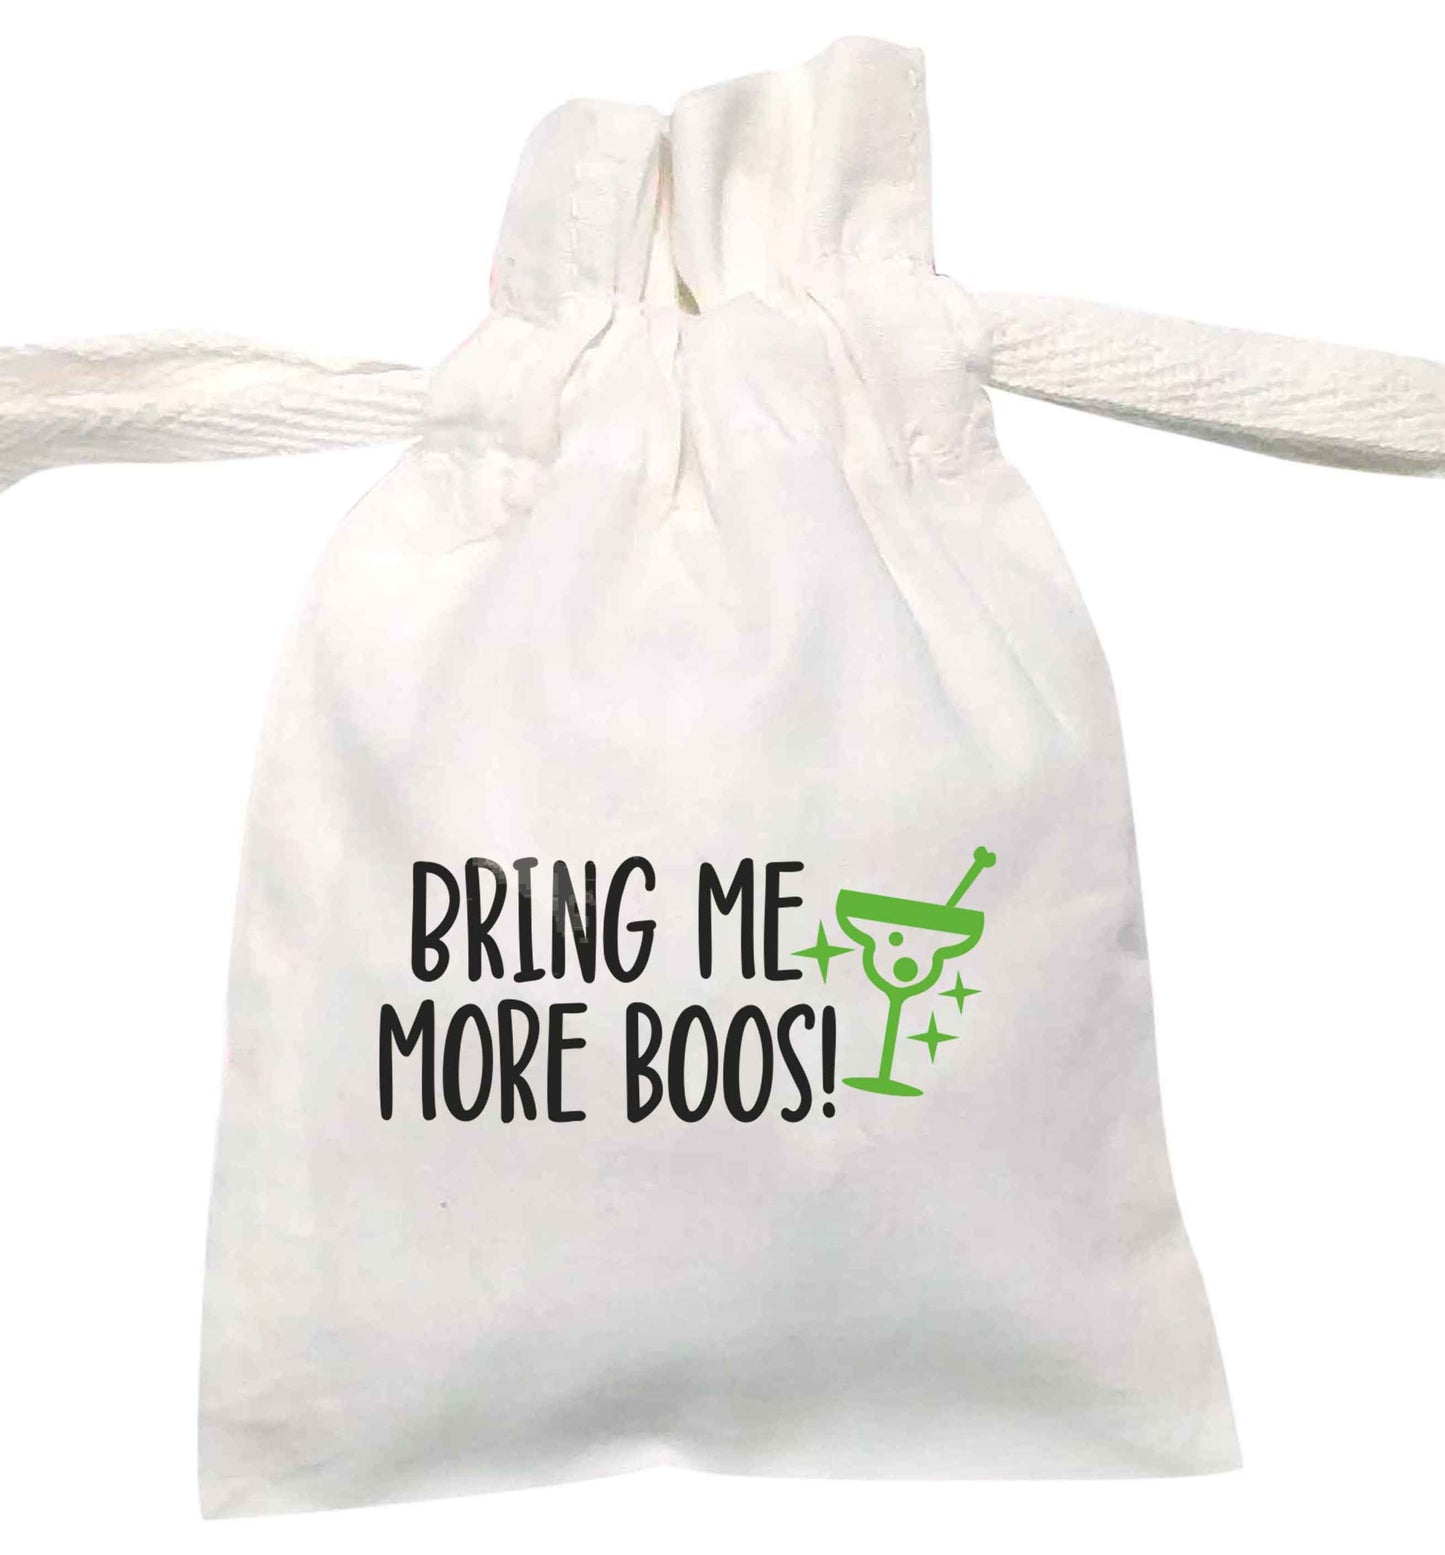 Bring me more boos | XS - L | Pouch / Drawstring bag / Sack | Organic Cotton | Bulk discounts available!